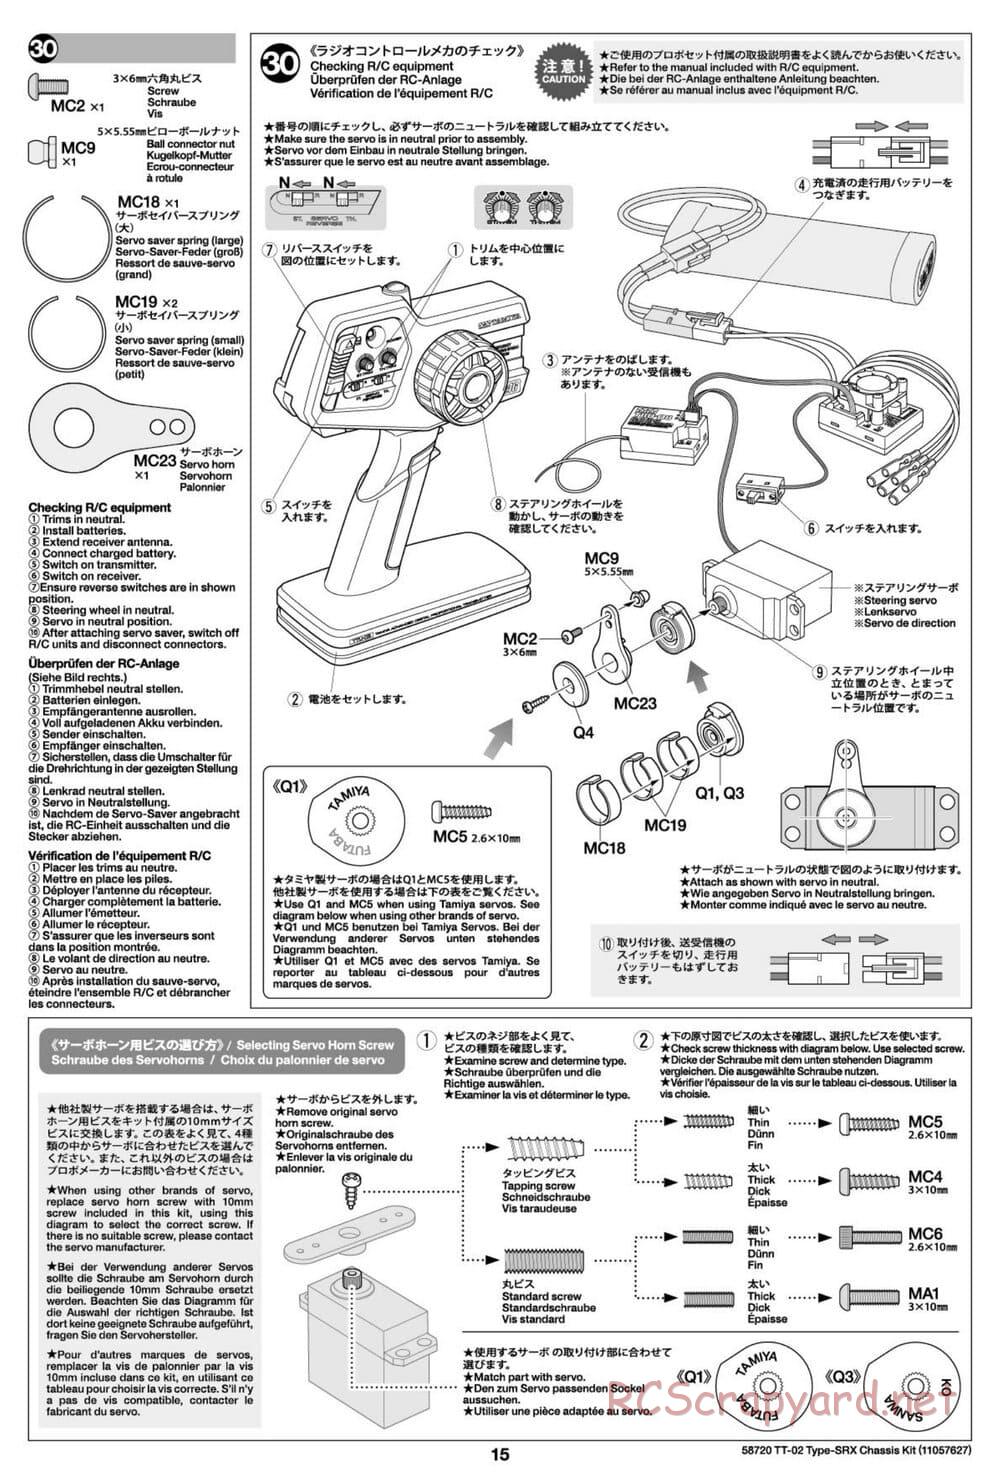 Tamiya - TT-02 Type-SRX Chassis - Manual - Page 15